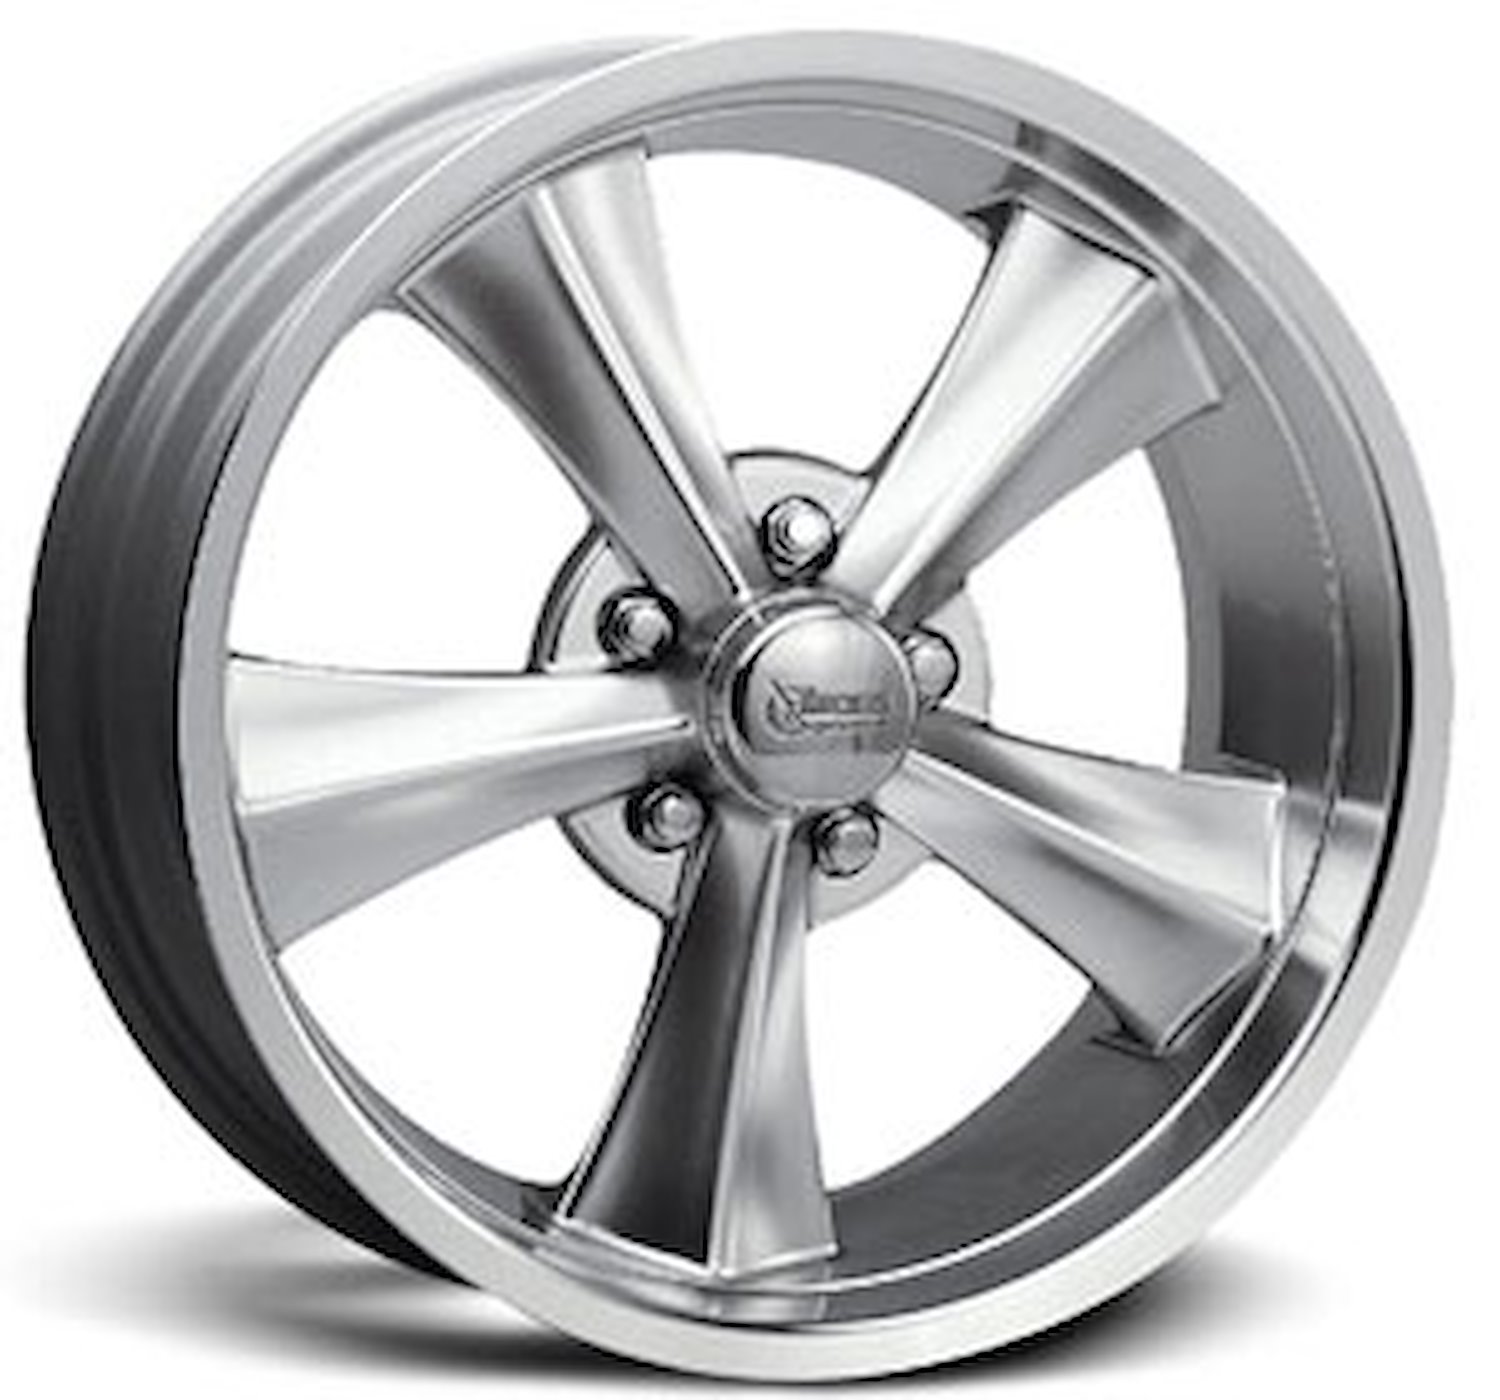 Booster Wheel - Hyper Silver Size: 18" x 8"